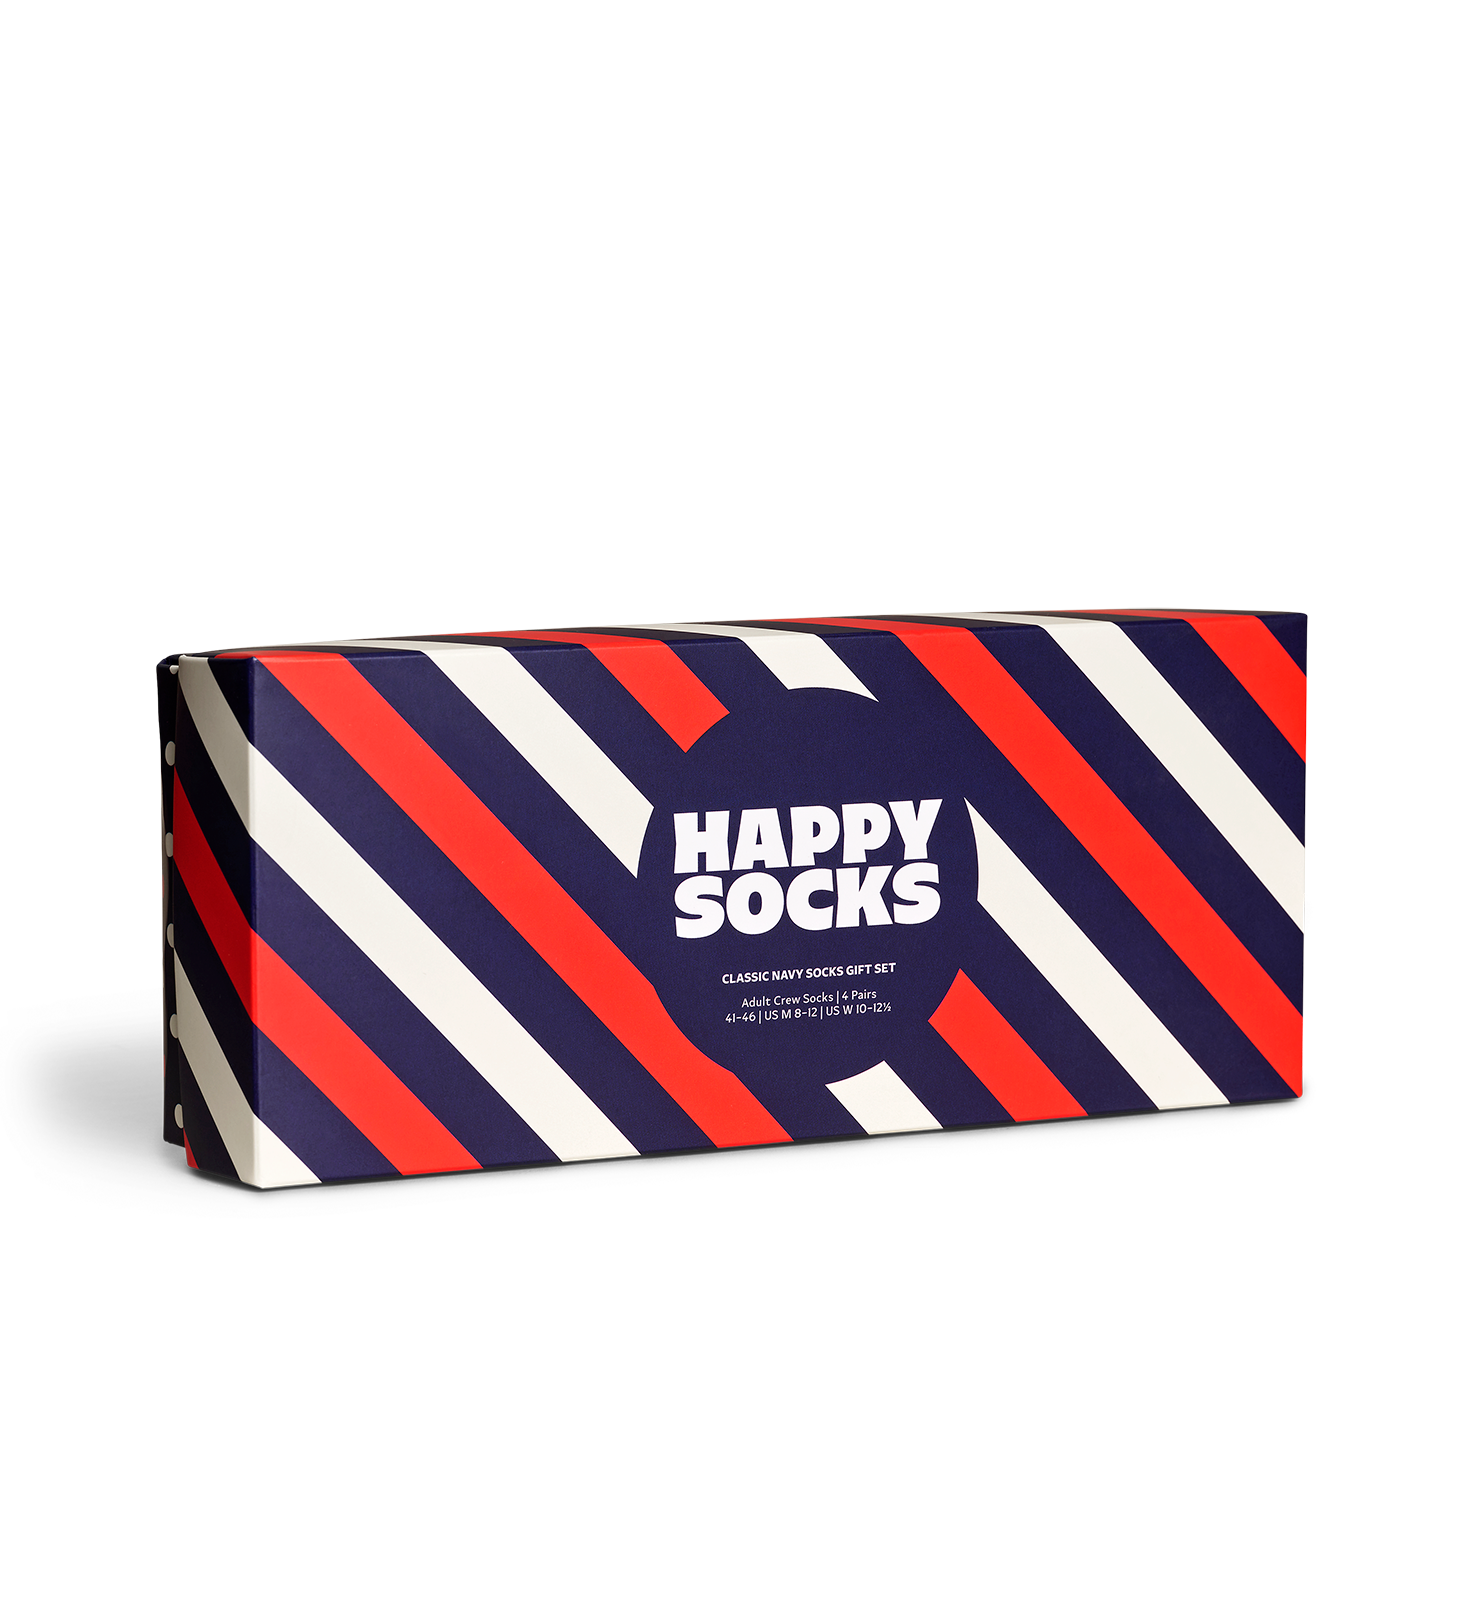 Gift US Crew Navy Socks Happy 4-Pack Set Socks Classic |